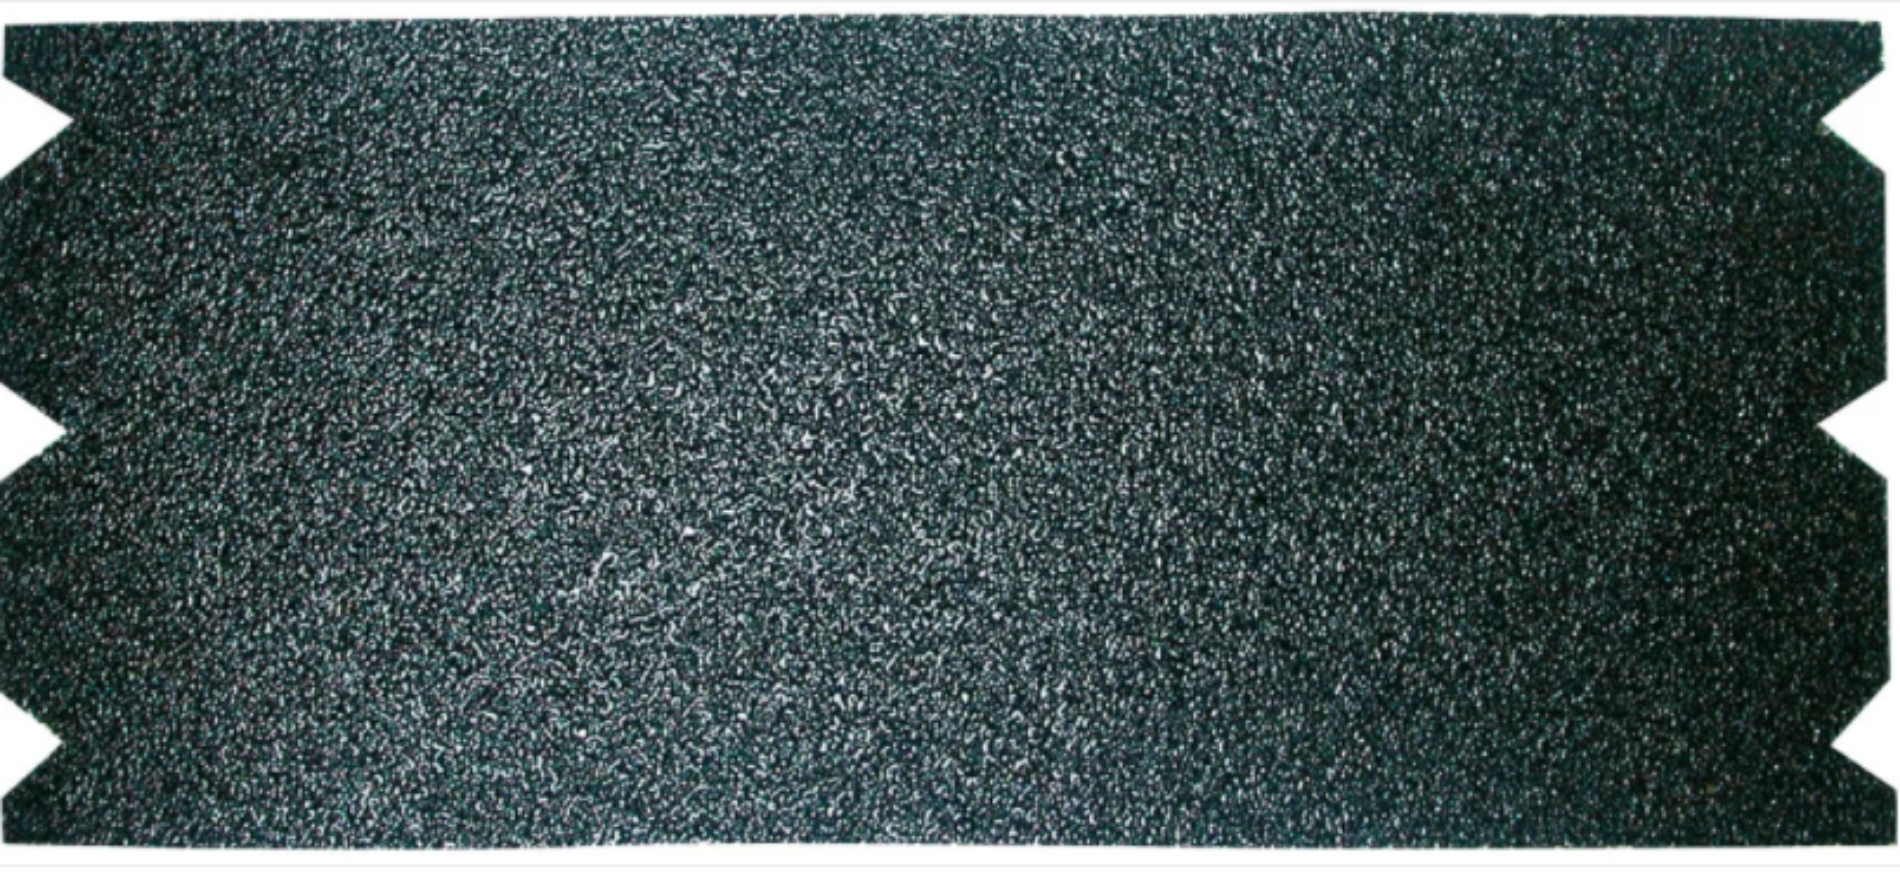 Picture of Makita Abrasive Floor Sander Sheet 120G (203mm x 476mm)